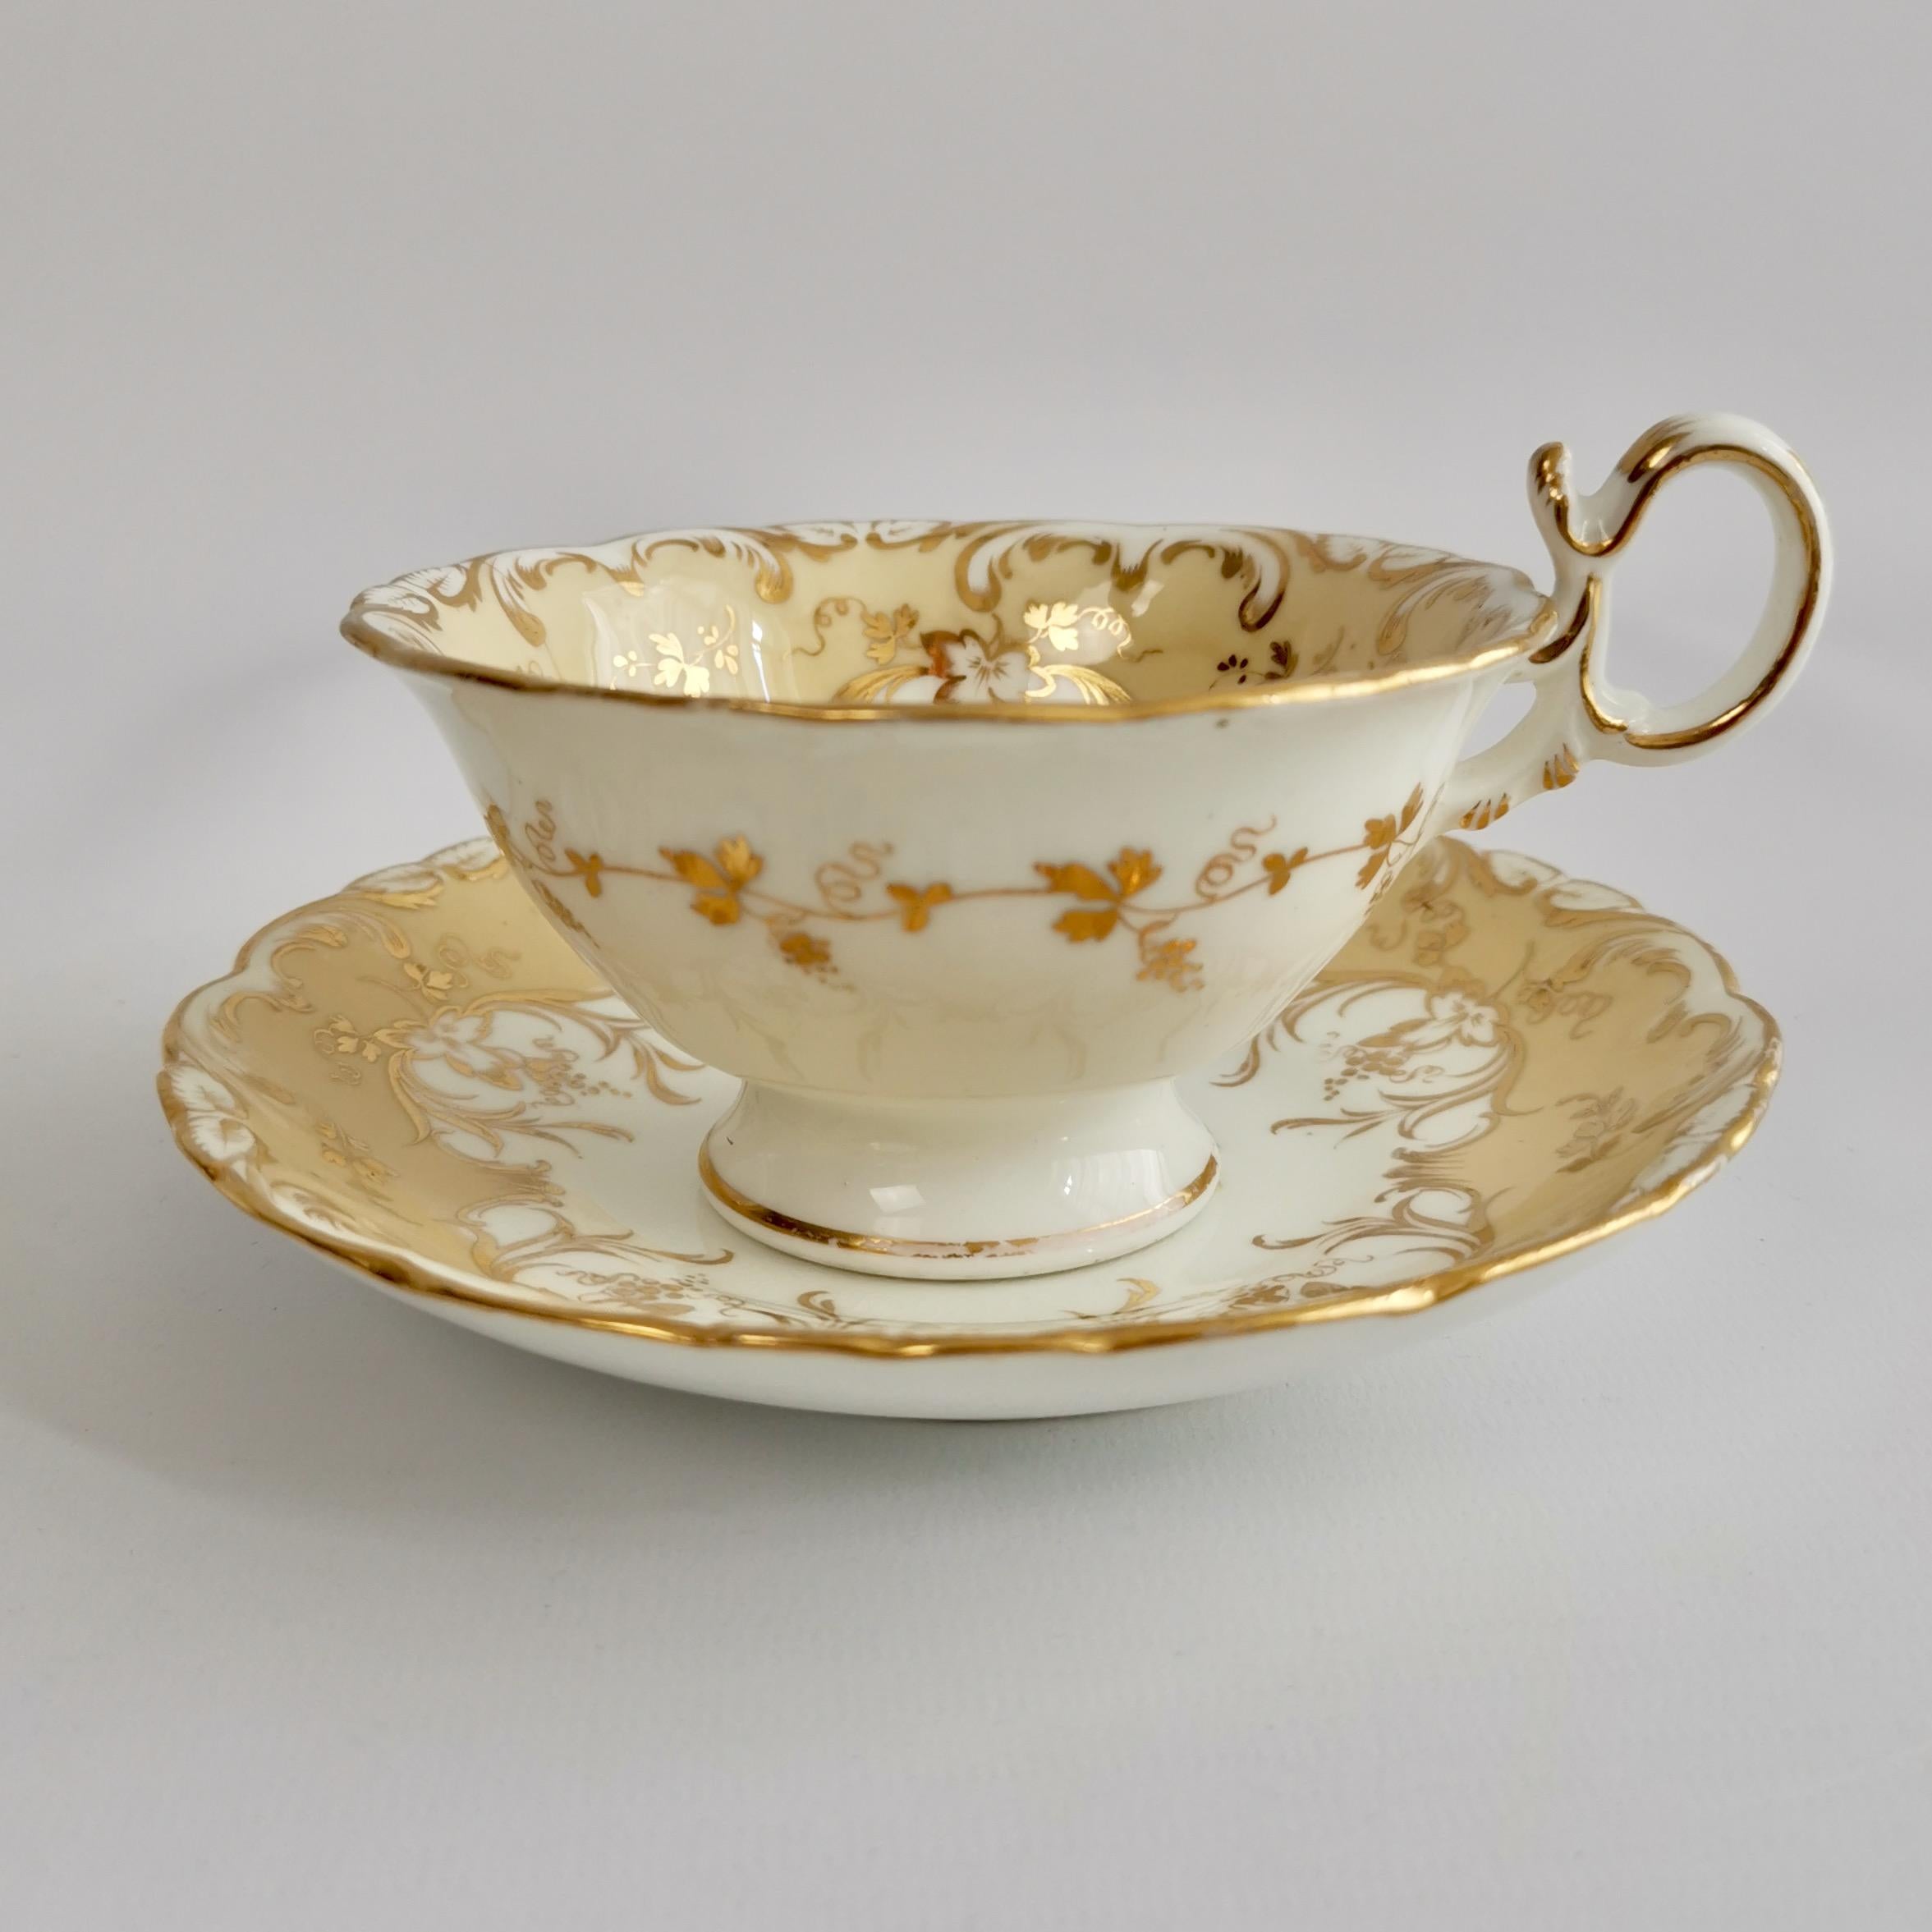 English Coalport Porcelain Teacup, Beige with Landscapes, Rococo Revival, ca 1840 For Sale